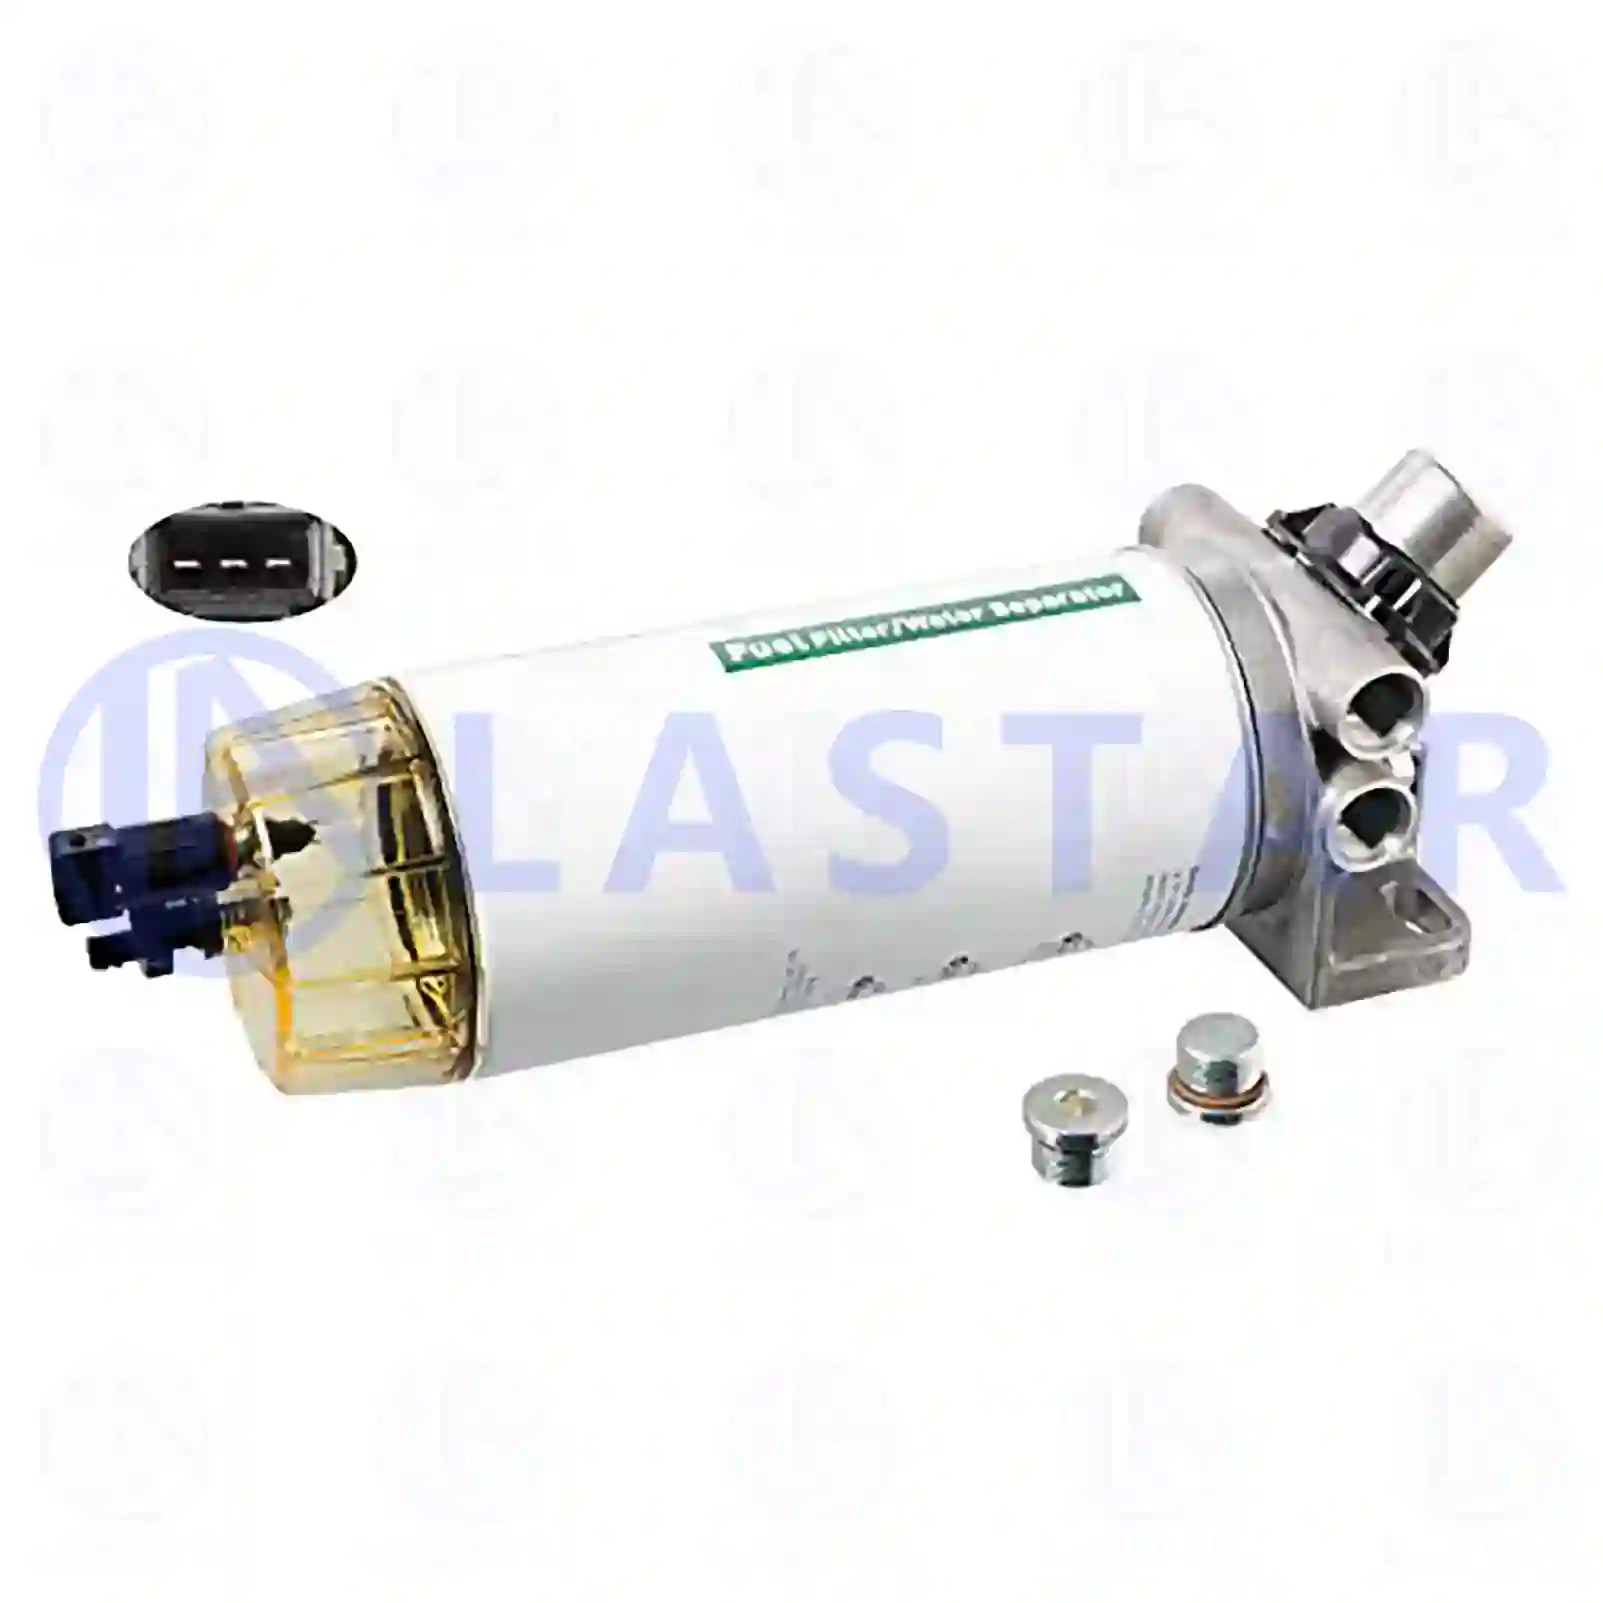 Fuel Filter, cpl. Fuel filter, complete, la no: 77724302 ,  oem no:5801510524 Lastar Spare Part | Truck Spare Parts, Auotomotive Spare Parts